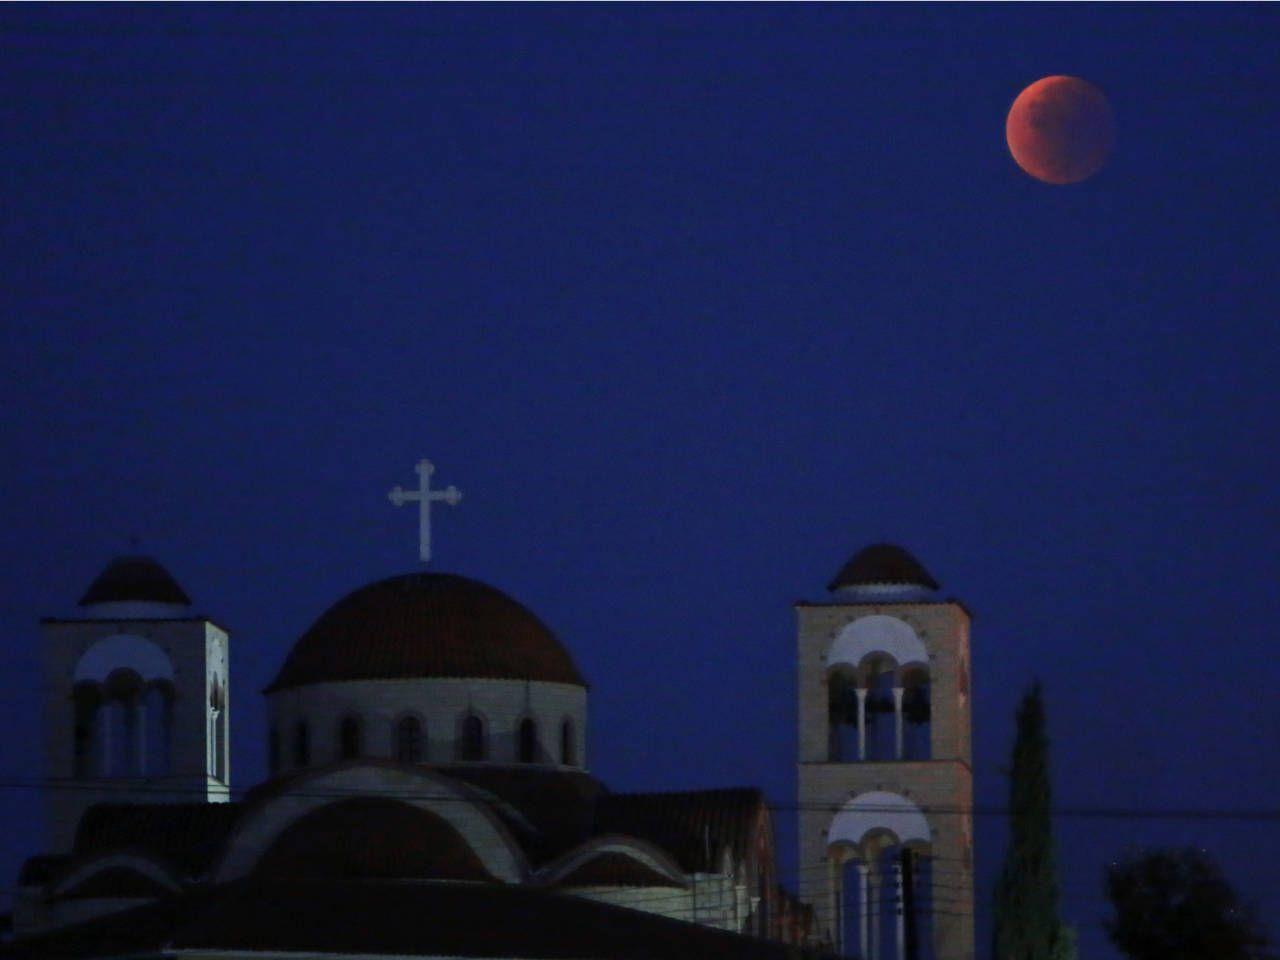 Blood moon magic: 17 amazing image of the supermoon around